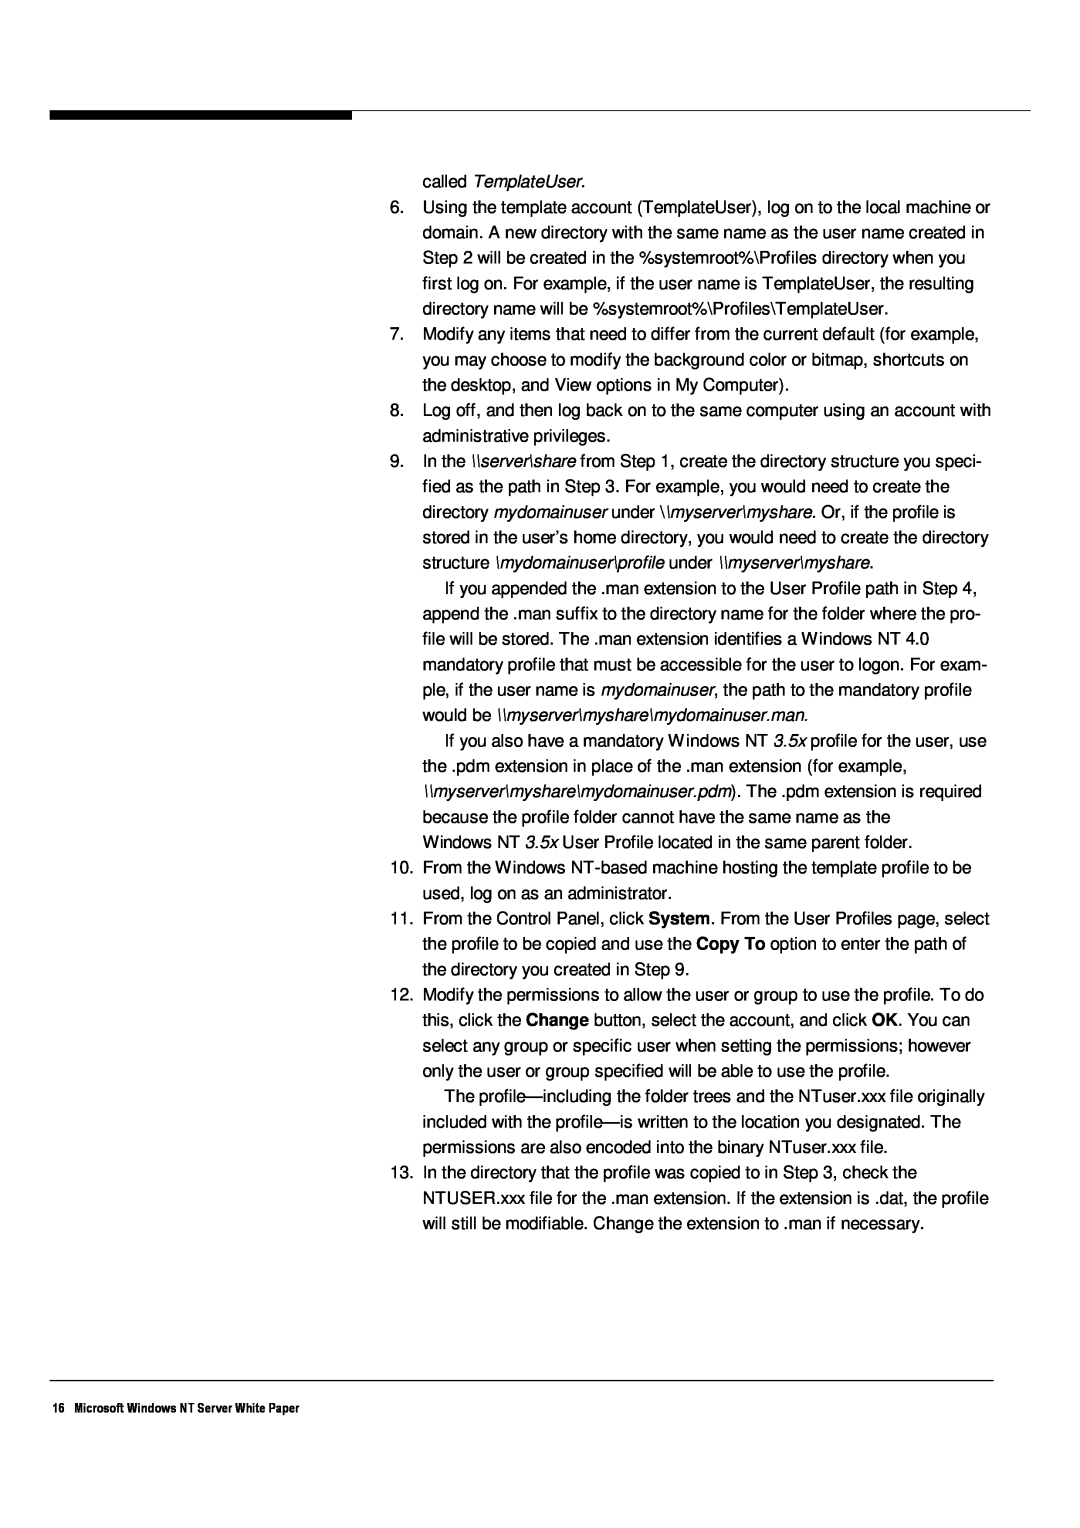 Microsoft Windows NT 4.0 manual called TemplateUser, Microsoft Windows NT Server White Paper 